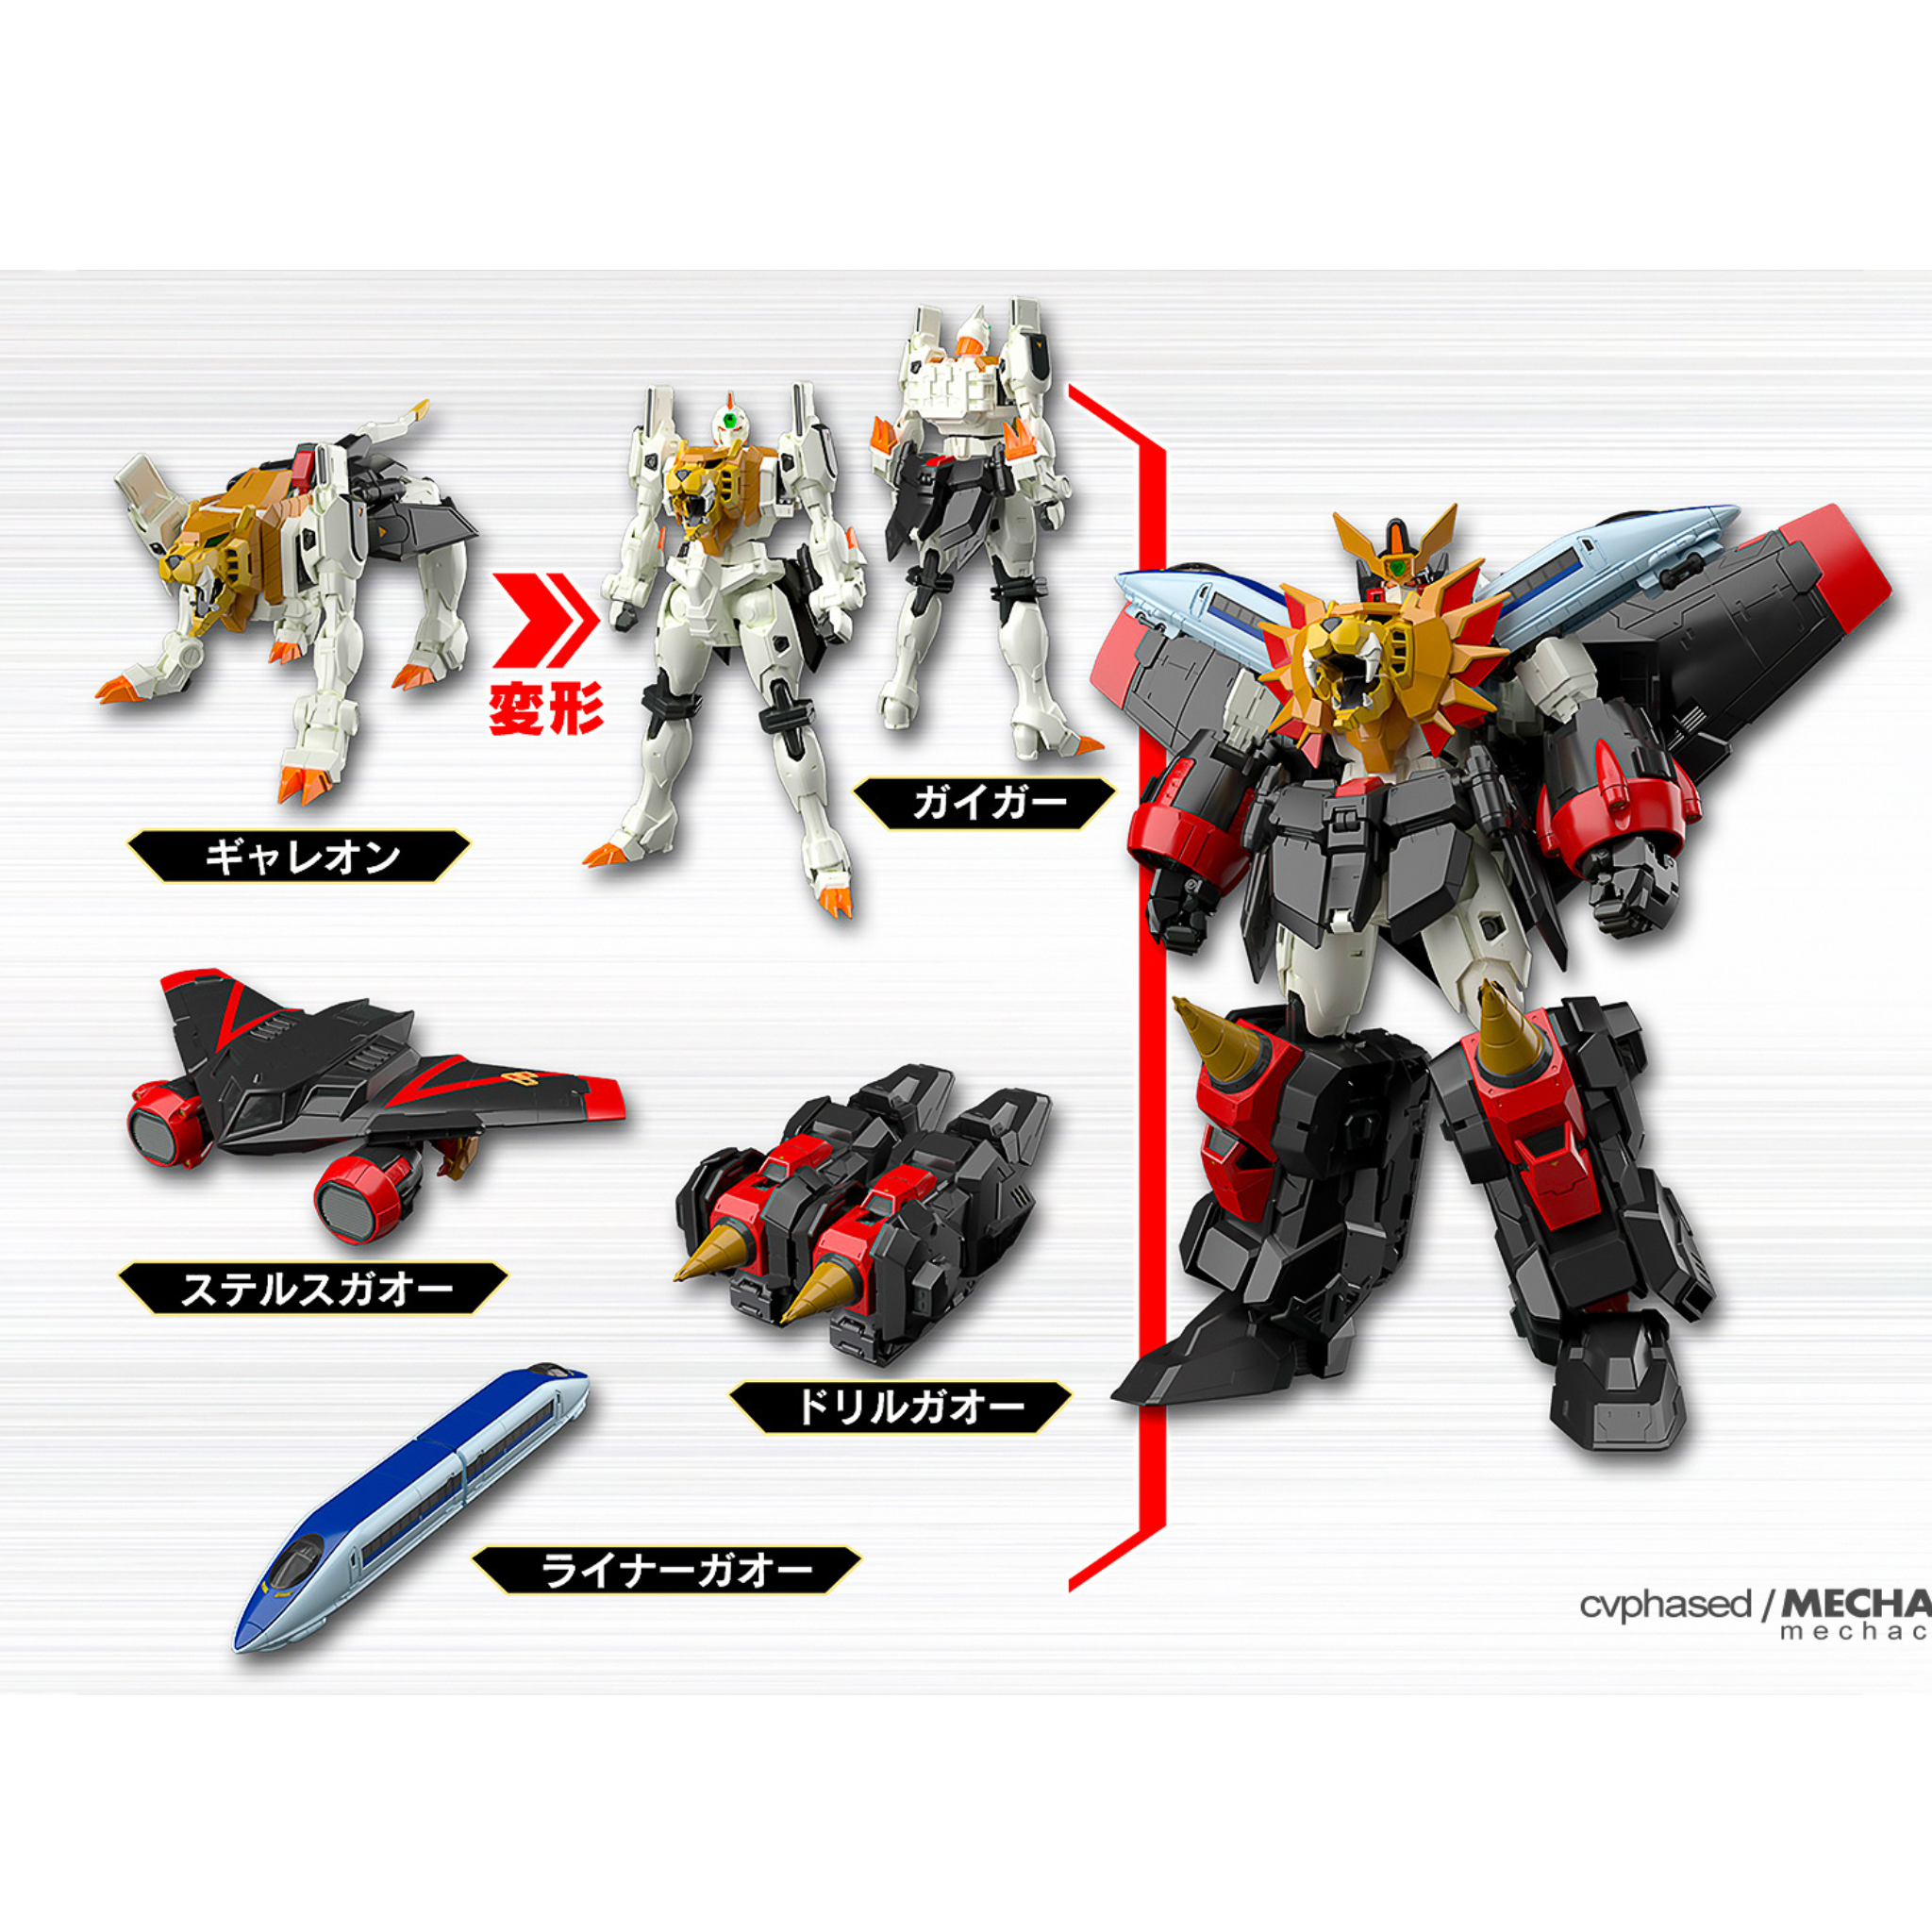 RG GaoGaiGar Mecha Model Kit #5063398 by Bandai